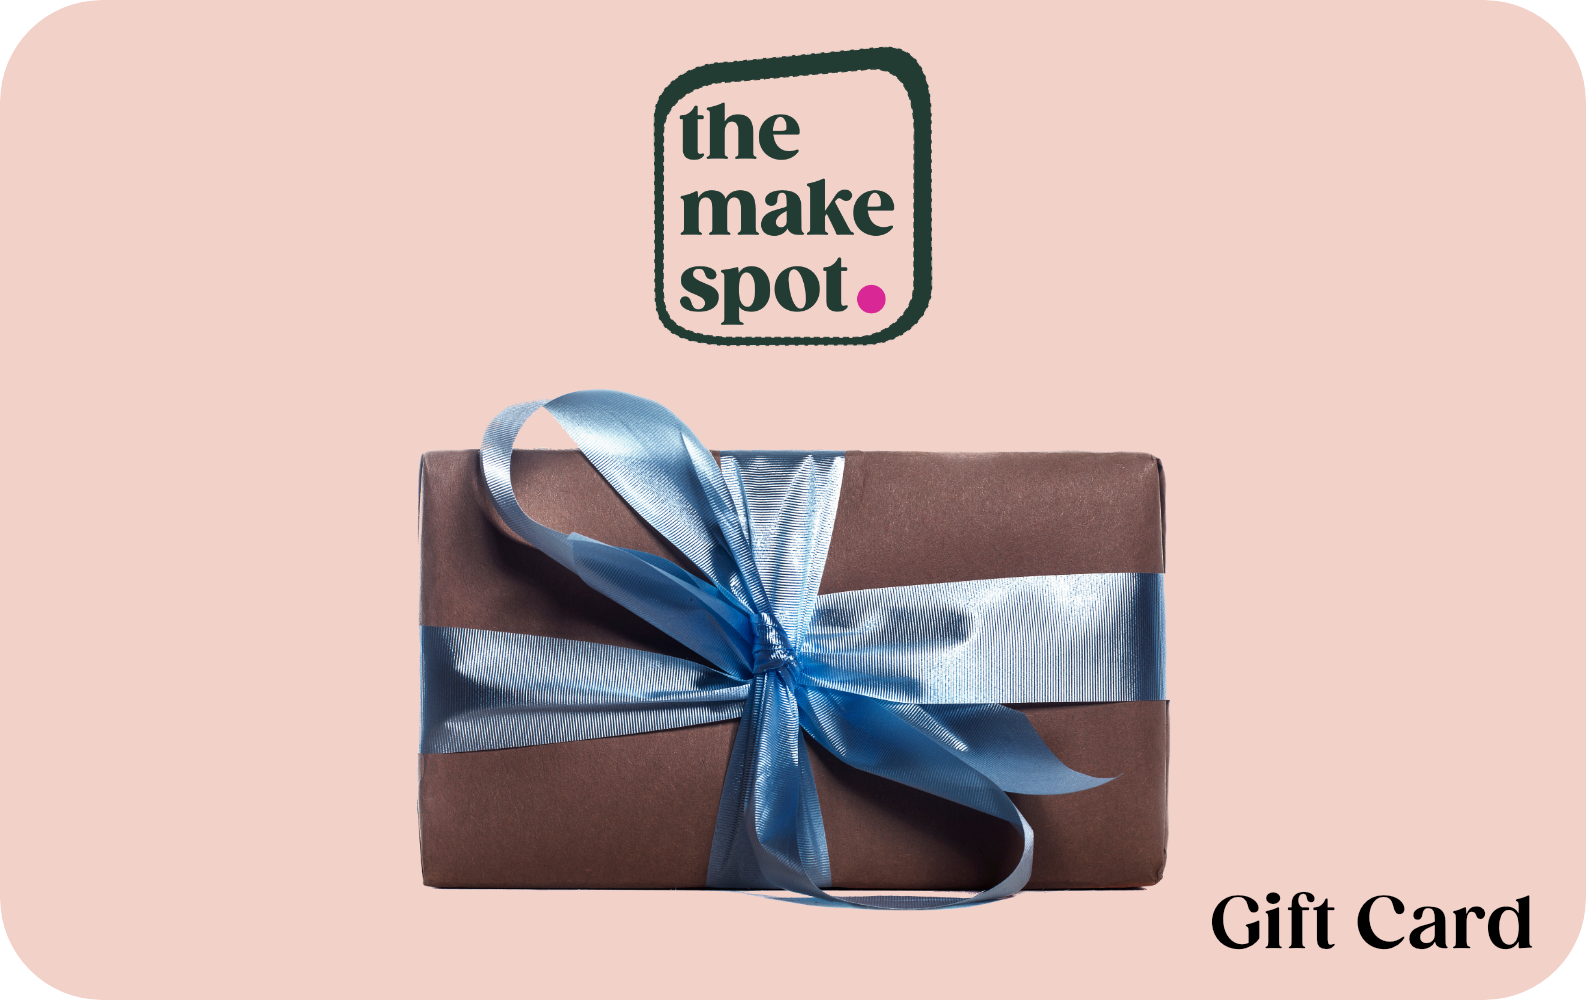 The Make Spot Gift Card